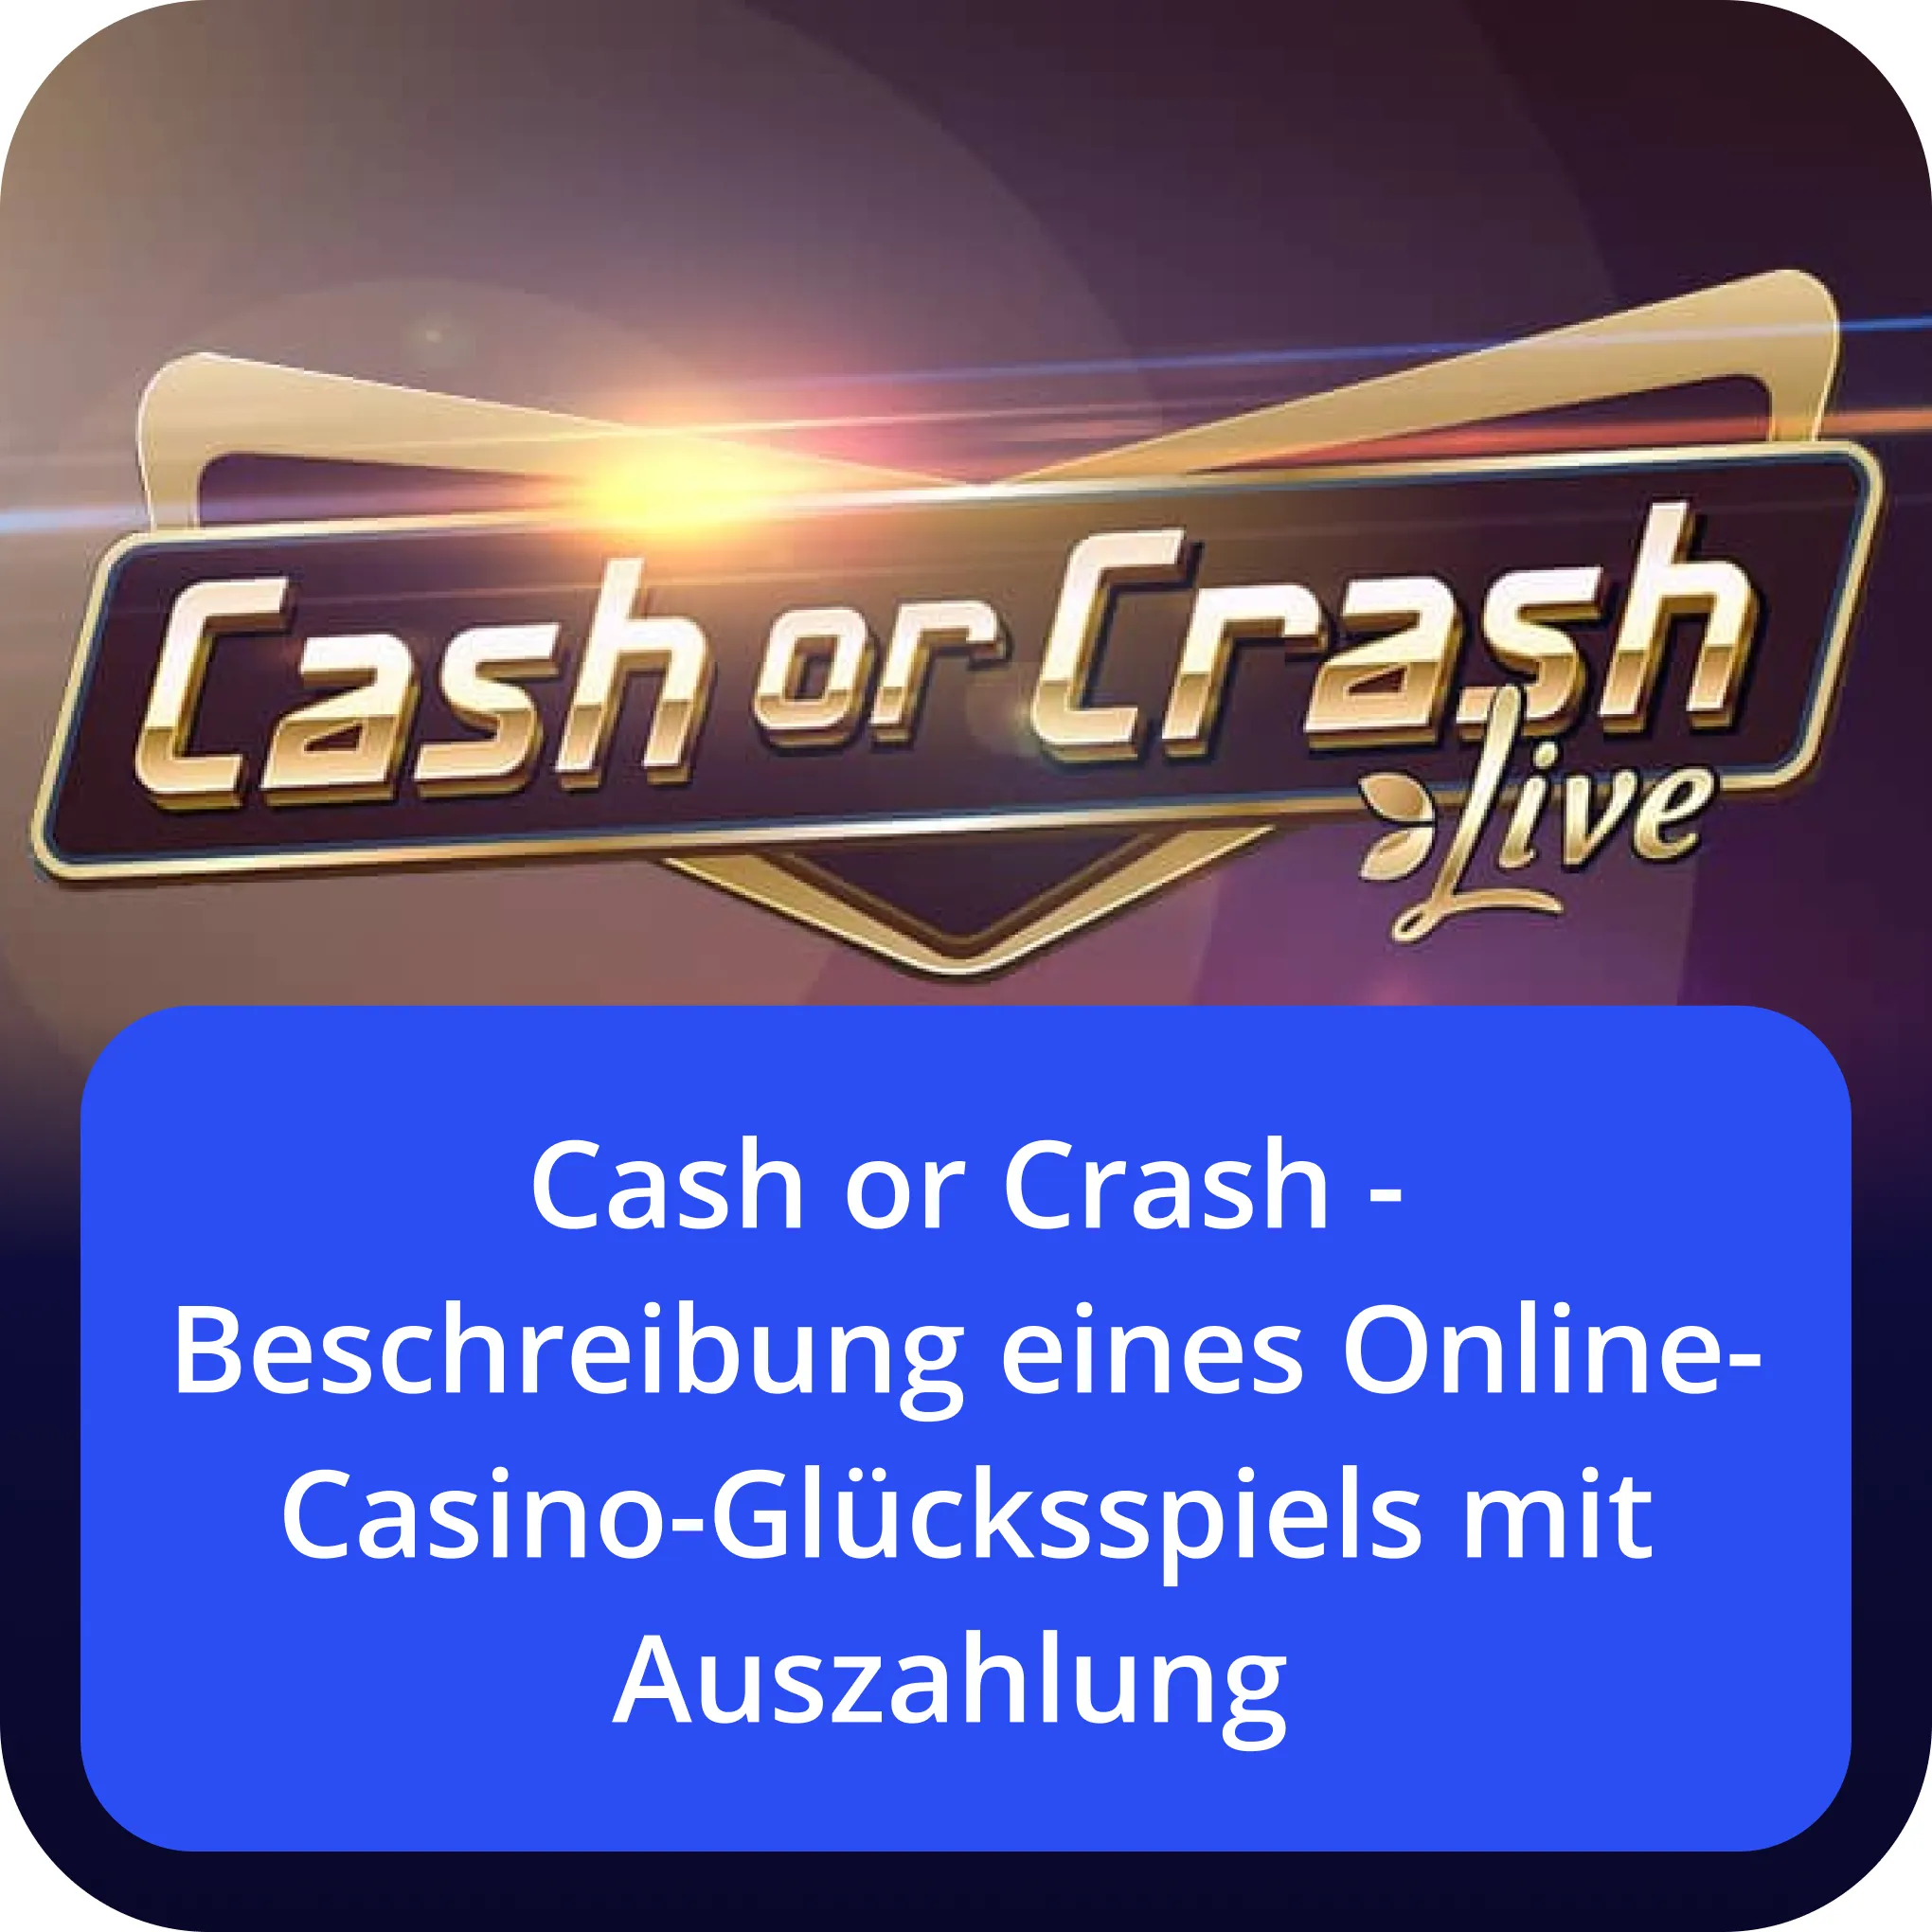 Cash or Crash glücksspiels 